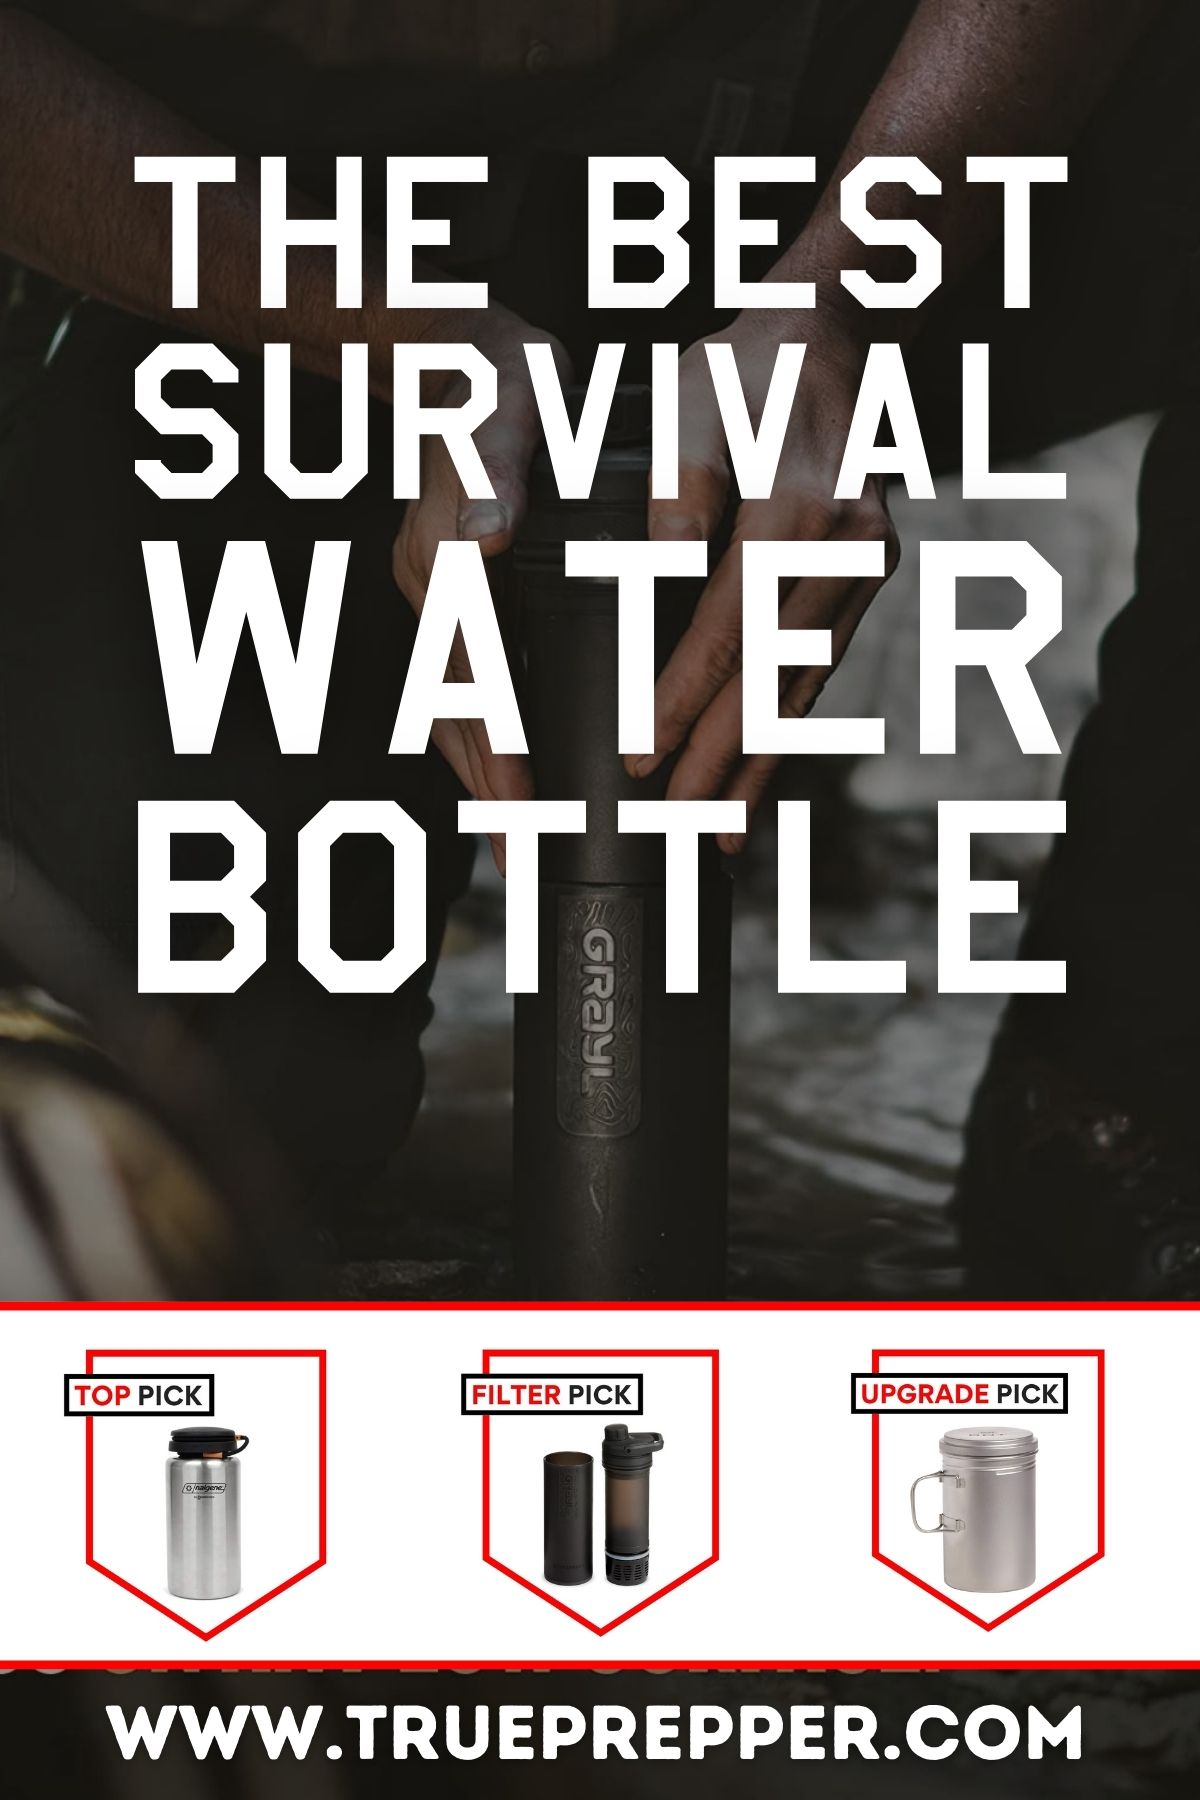 The Best Survival Water Bottle